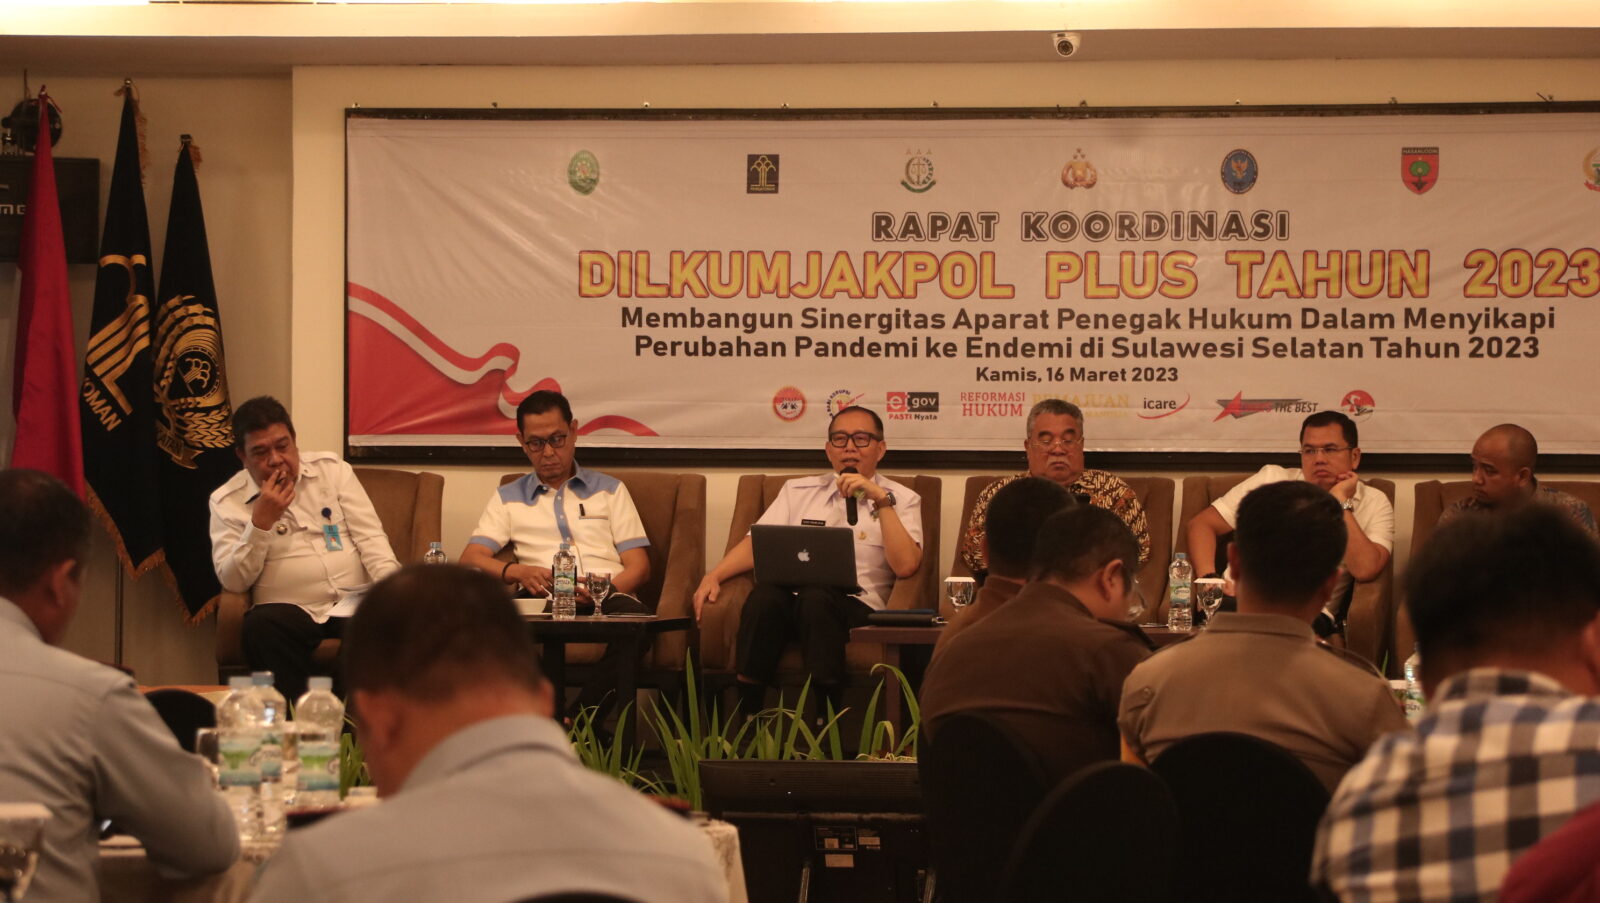 Kepala BNNP Sulawesi Selatan Mengikuti Kegiatan Rapat Koordinasi DILKUMJAKPOL Plus Tahun 2023